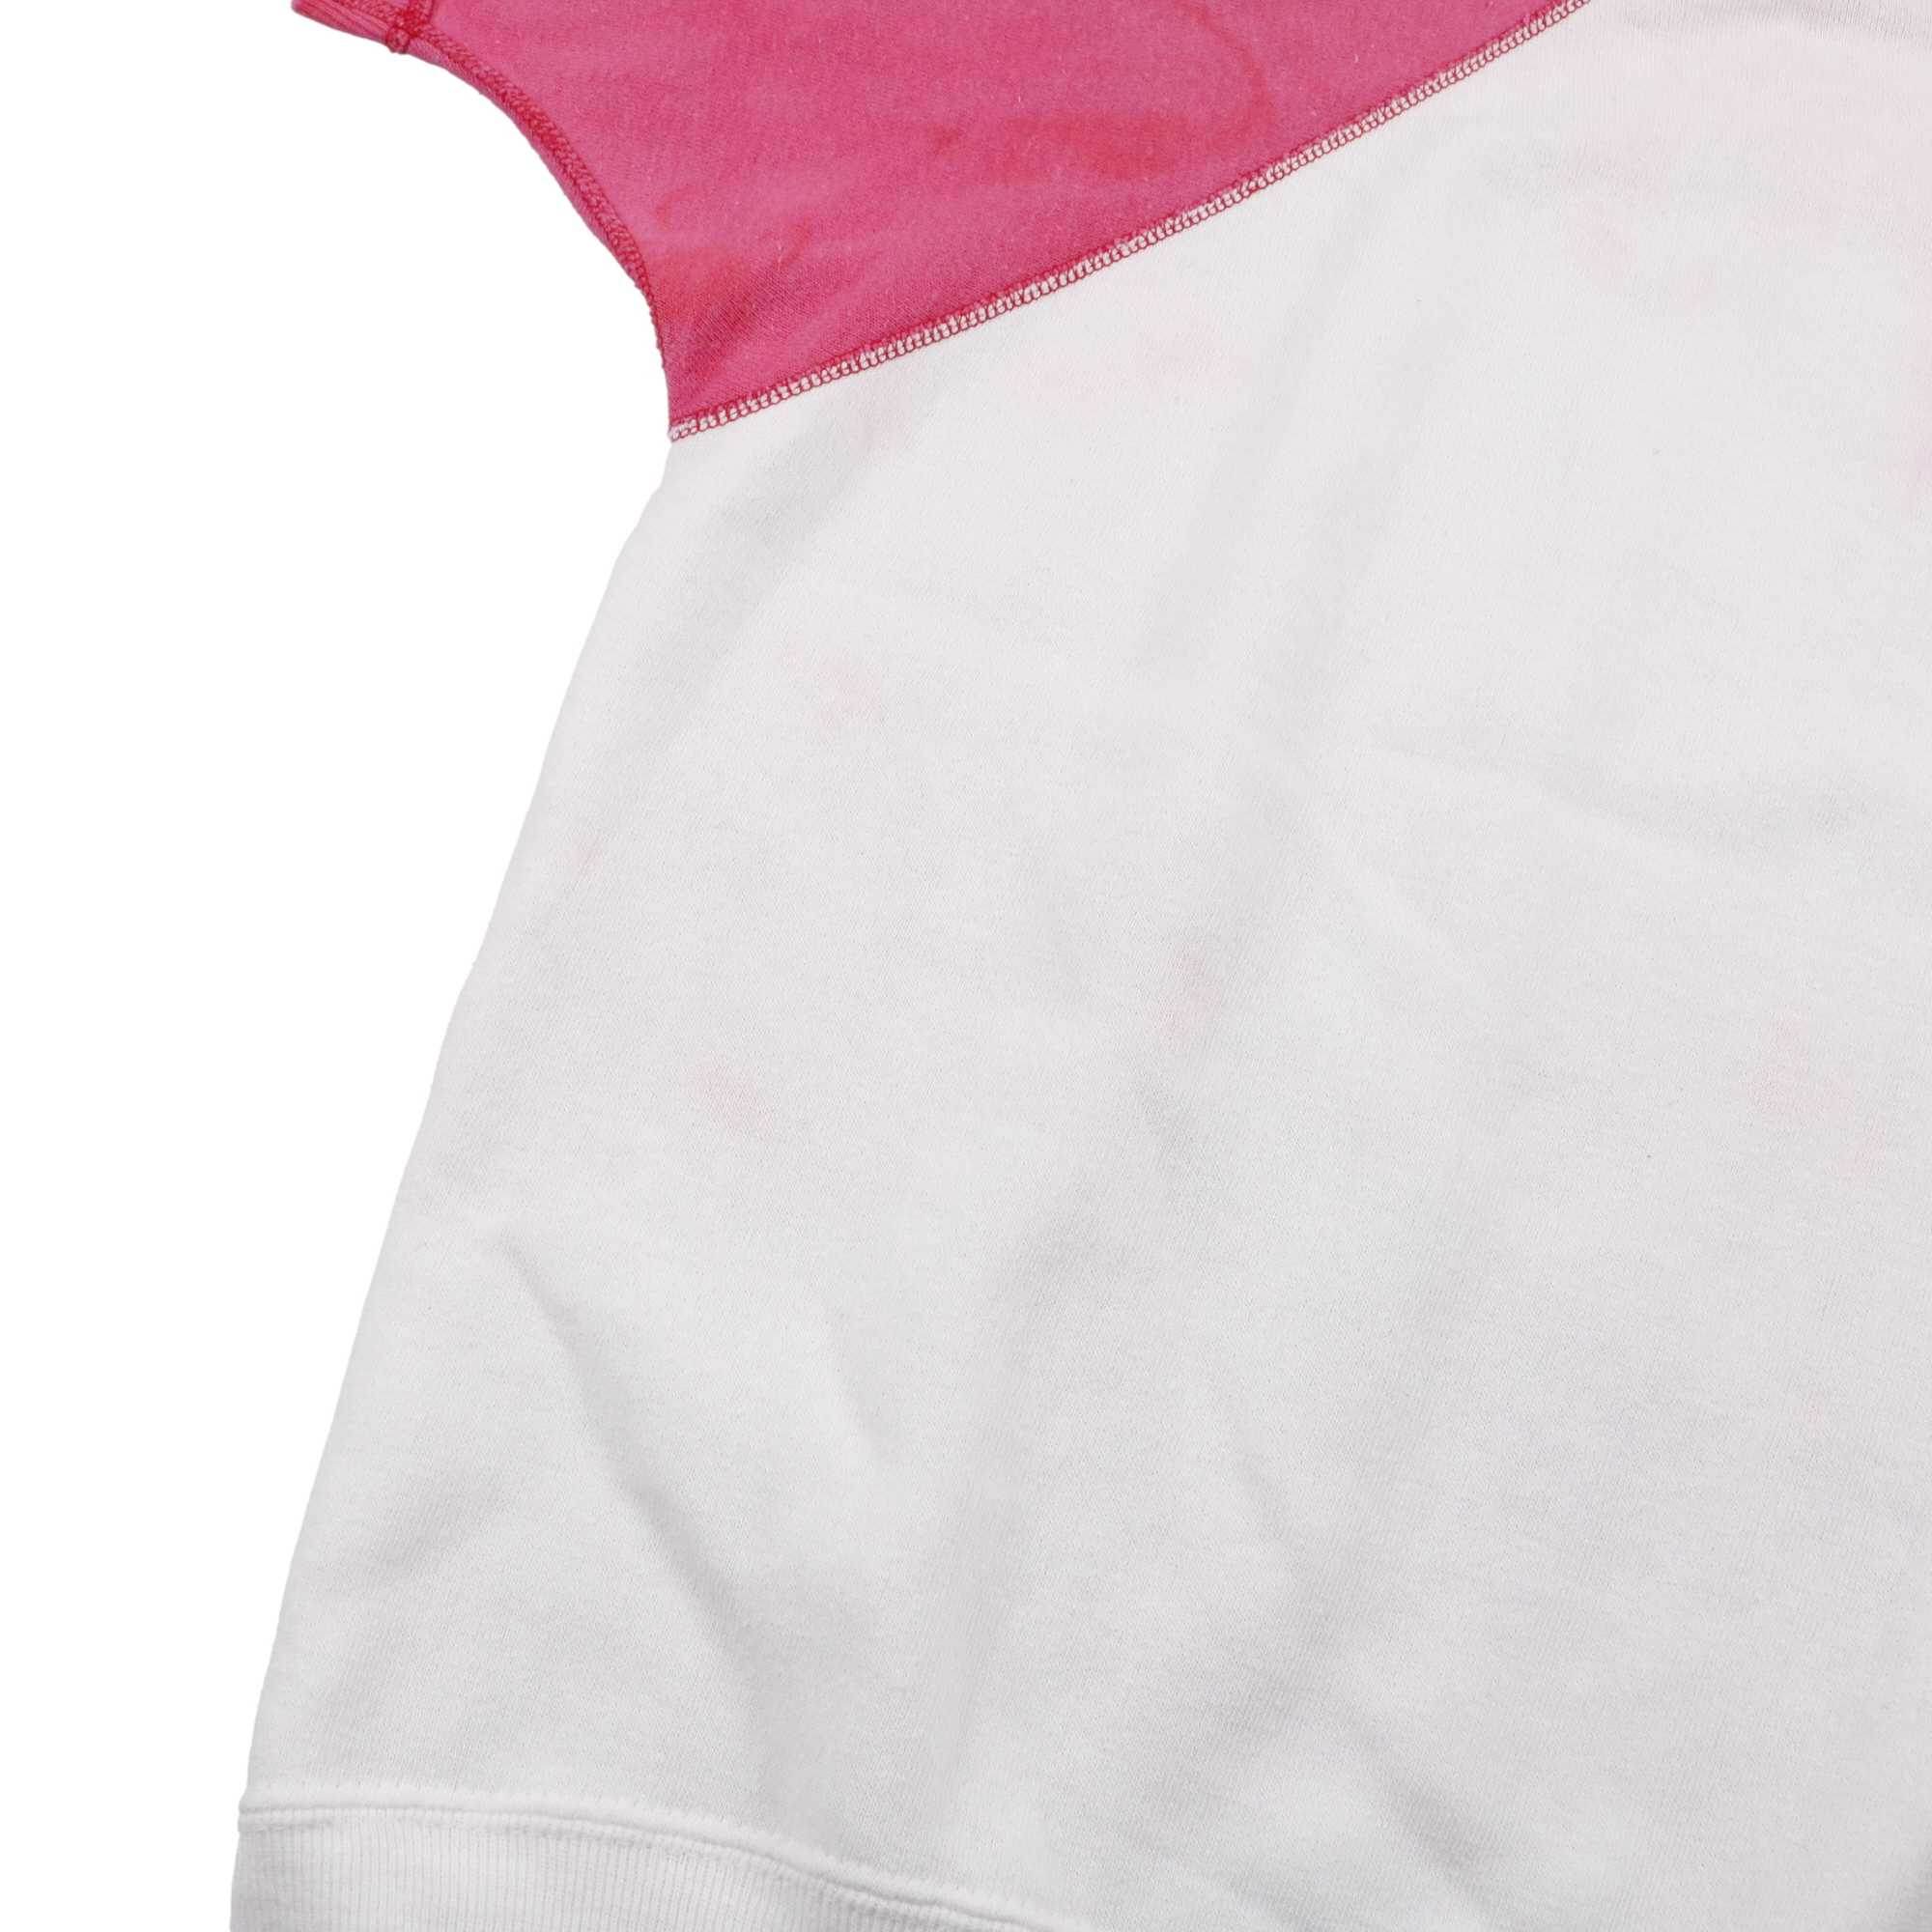 60s ヴィンテージ Archie Bunker アーチバンカー S/S 半袖 スウェット シャツ 染込みプリント 白 ホワイト 桃 ピンク ツートン  M程